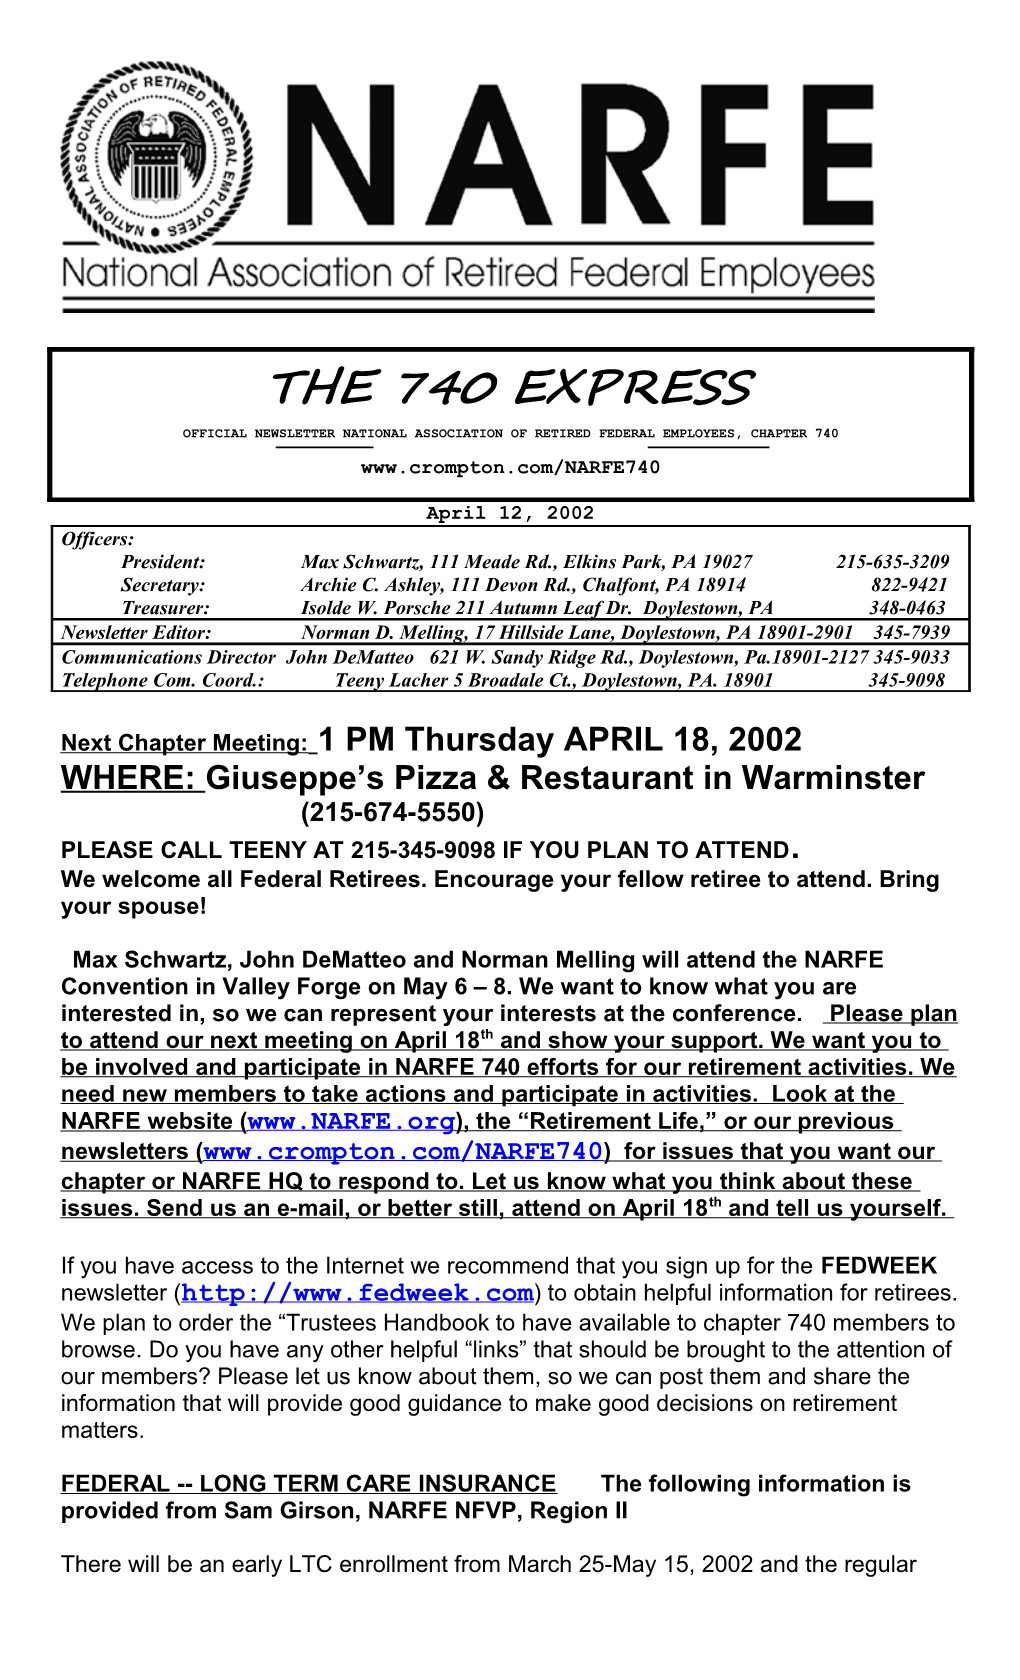 Next Chapter Meeting: 1 PM Thursday APRIL 18, 2002